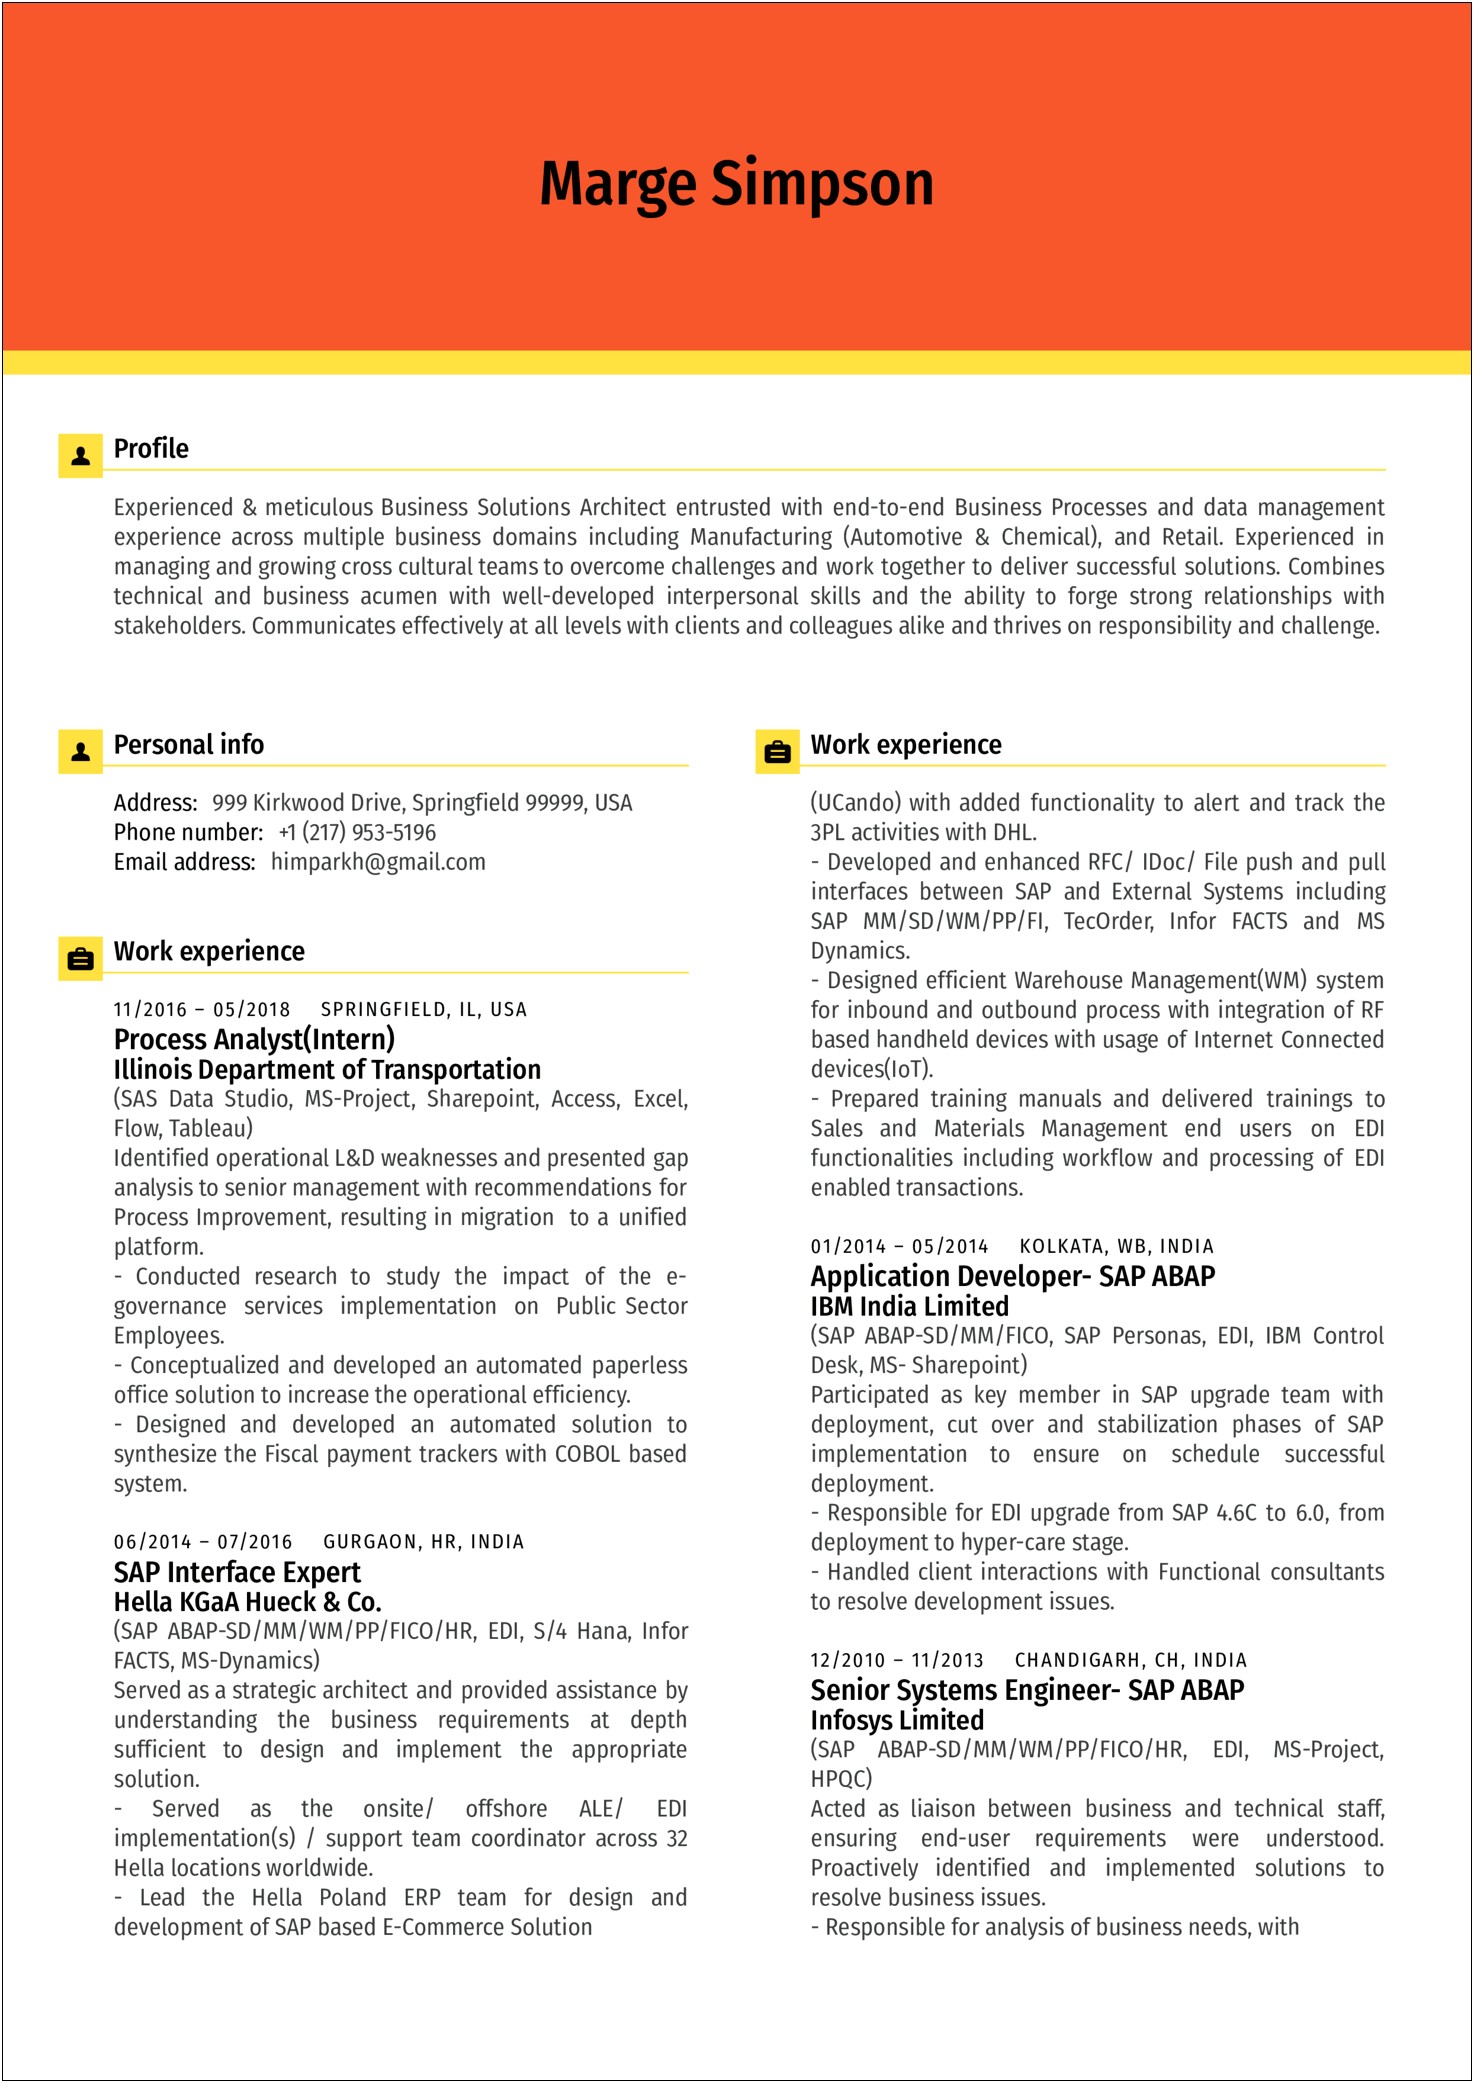 Sample Resume Of Infosys Employee